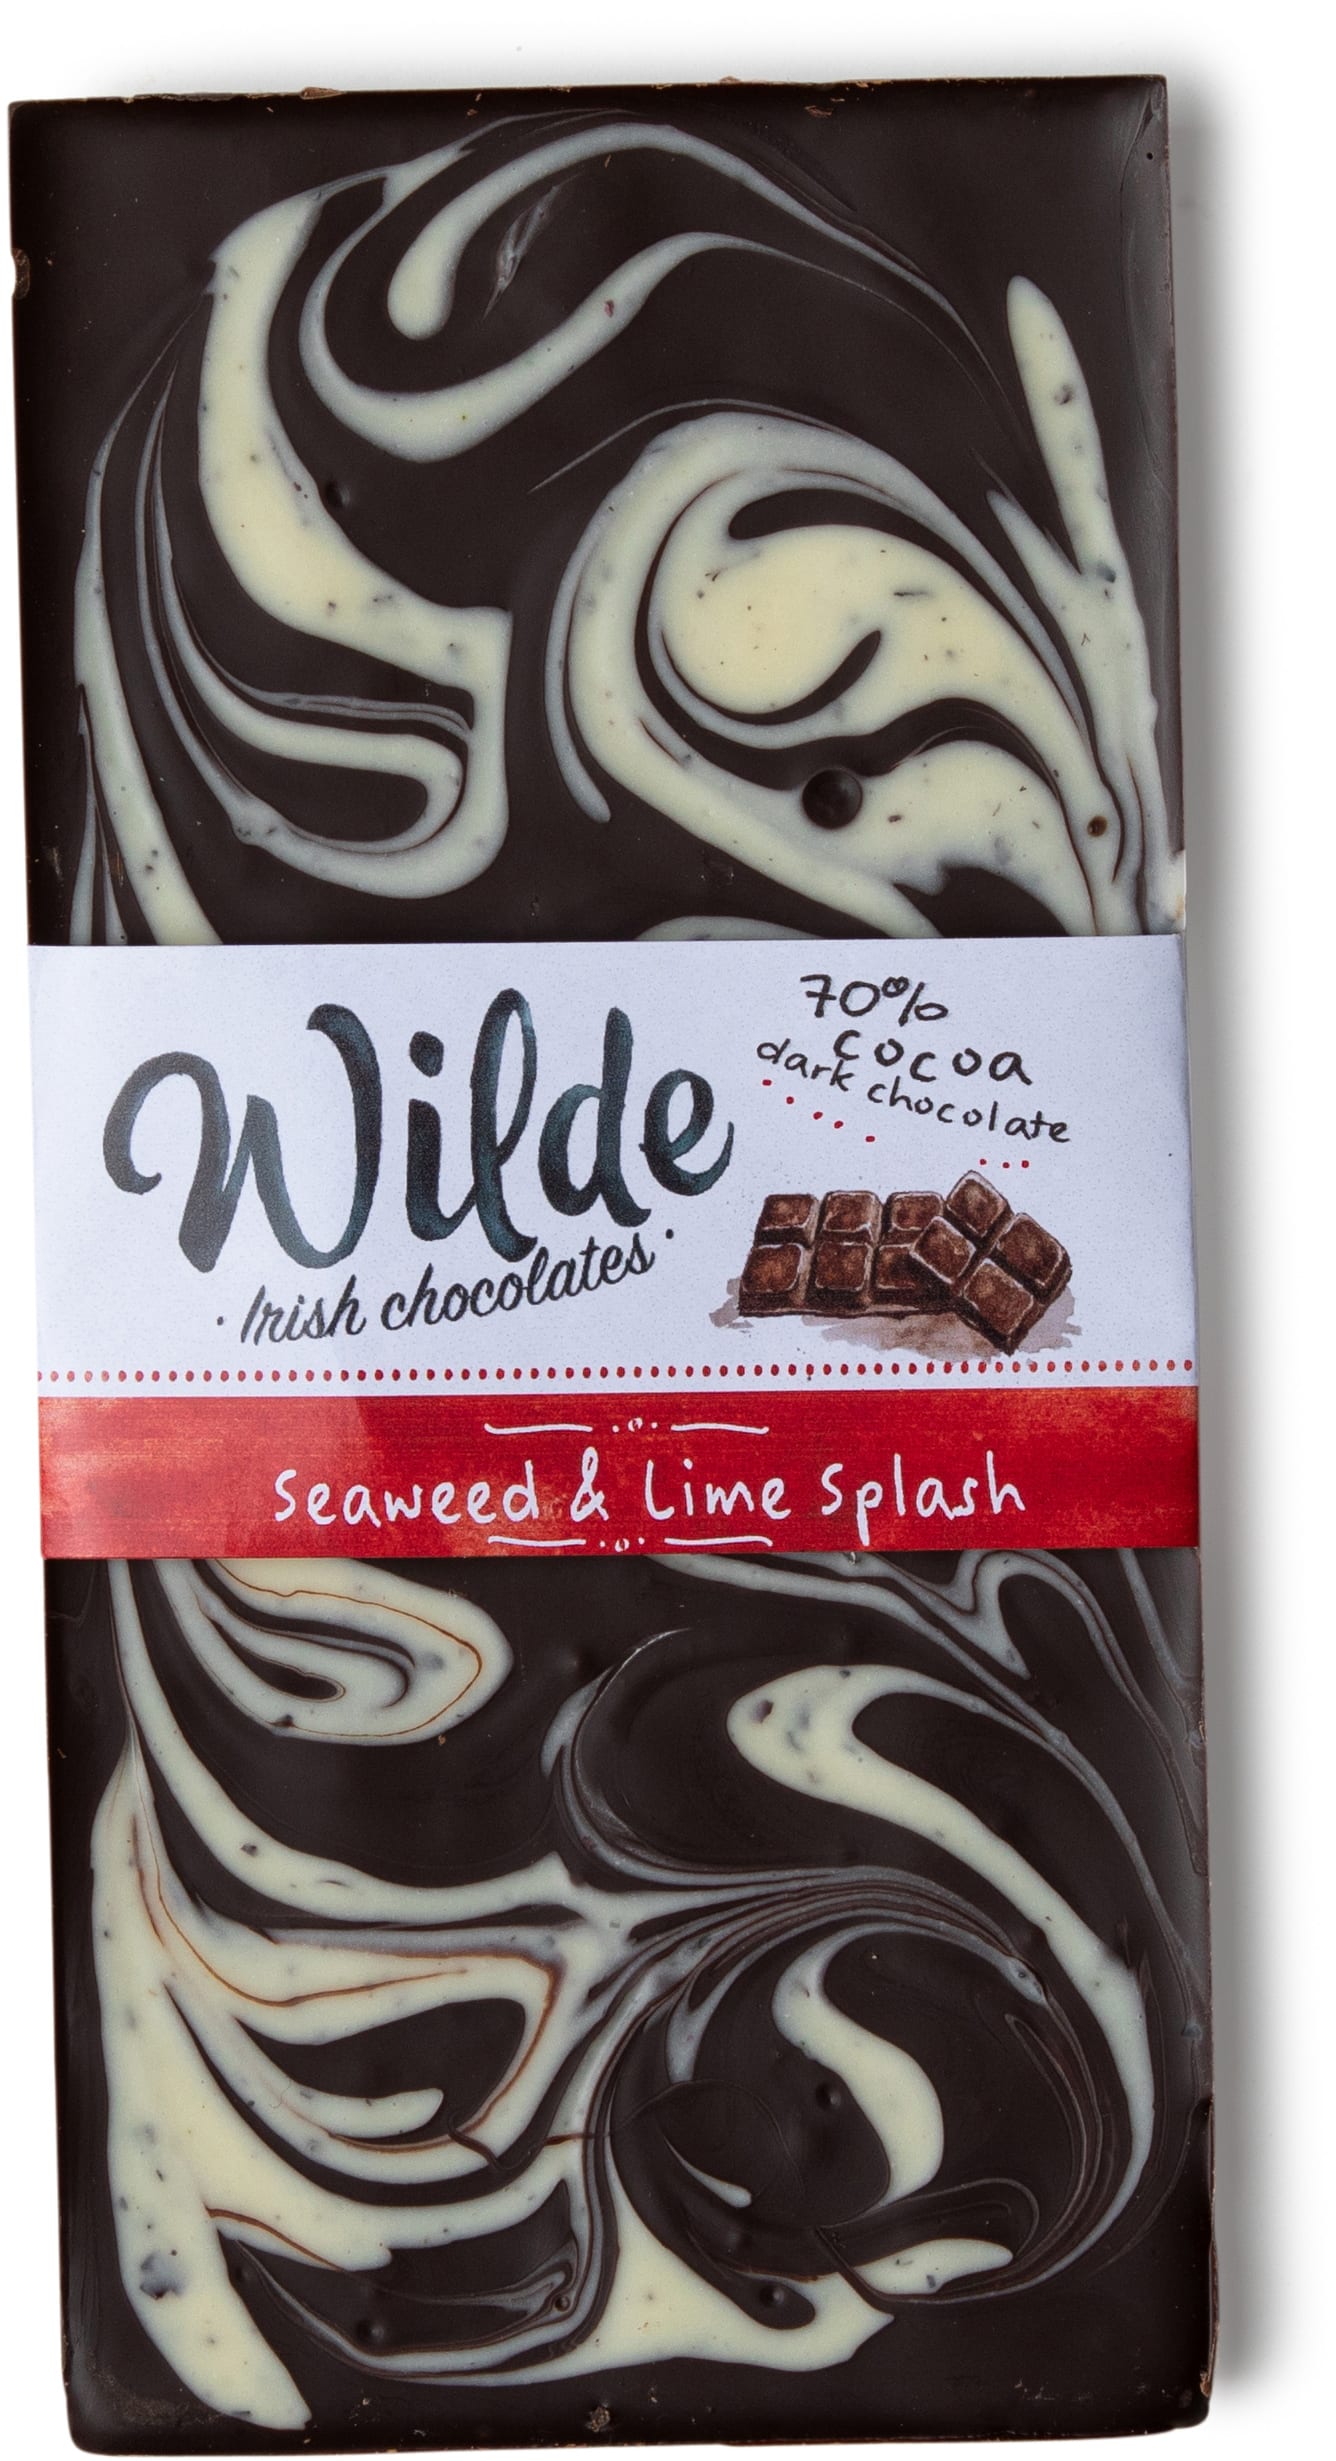 seaweed & lime splash chocolate bar - Wilde Irish Chocolates